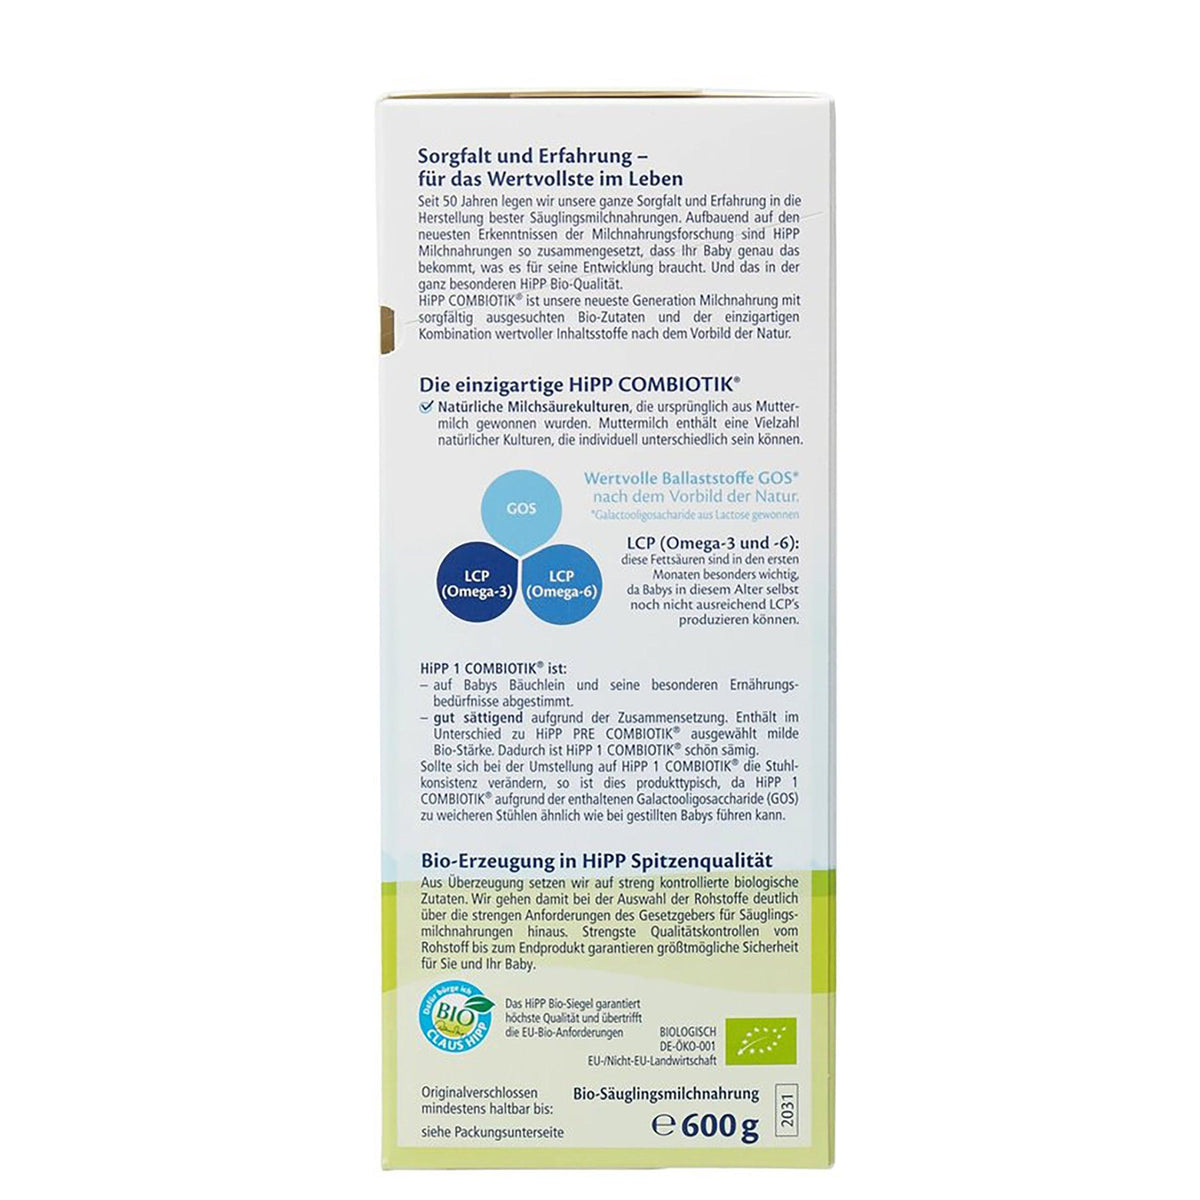 Organic Combiotik® Infant Formula 1 600 g